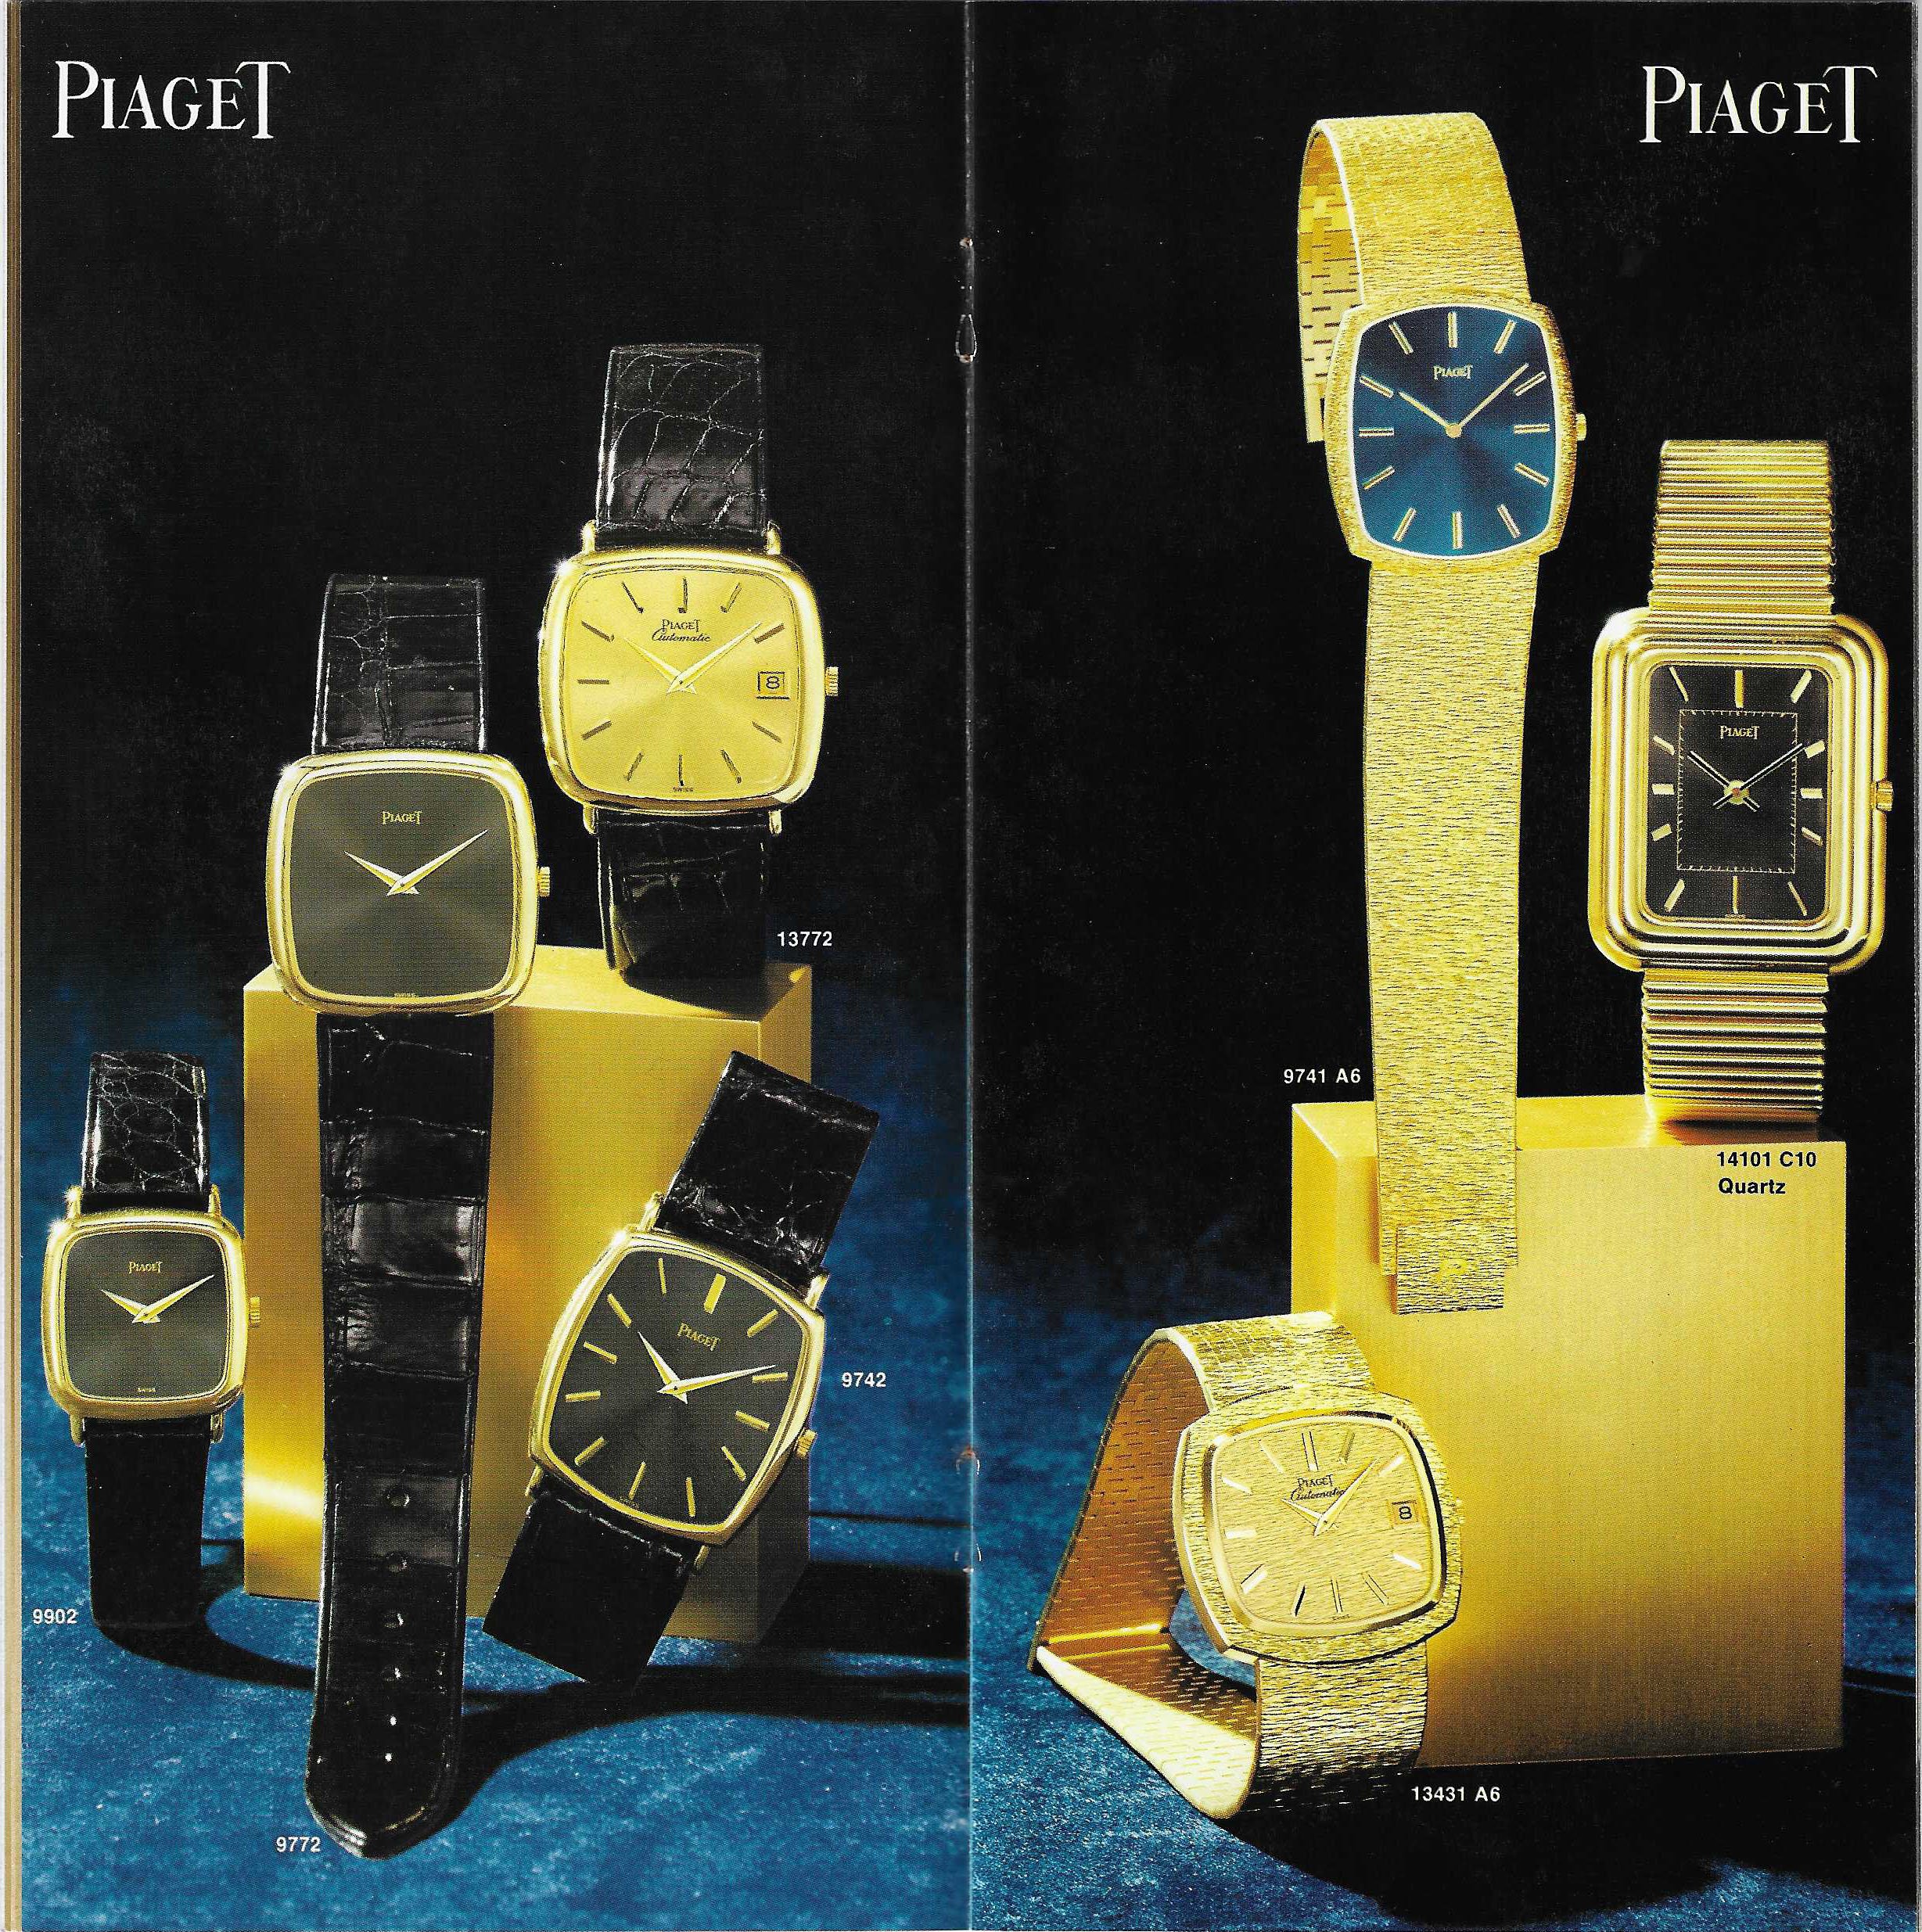 Piaget Brochure April 1976 from Pedro Alvarez,Spain